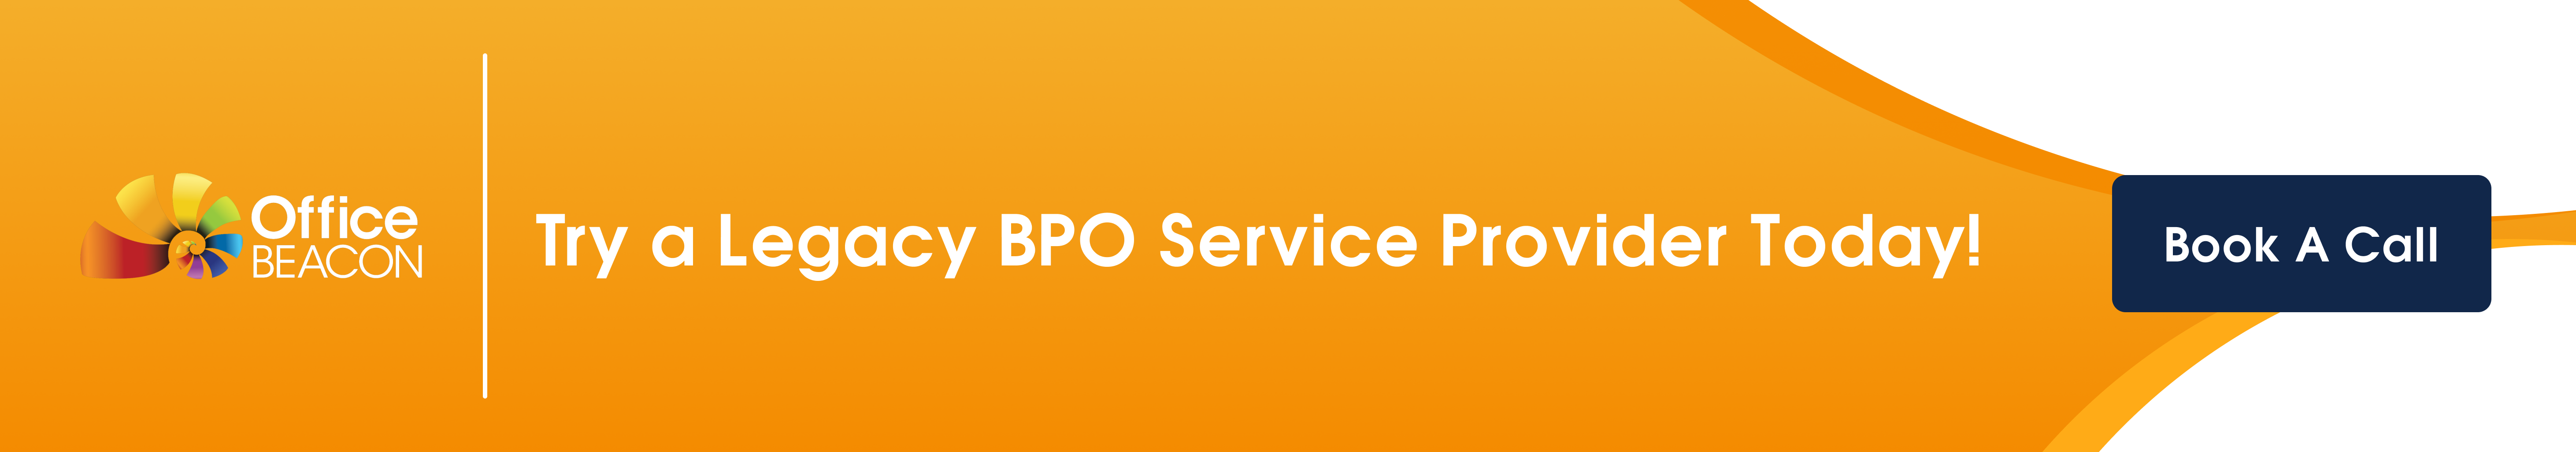 Legacy BPO Service Provider Flowz - Book a Call